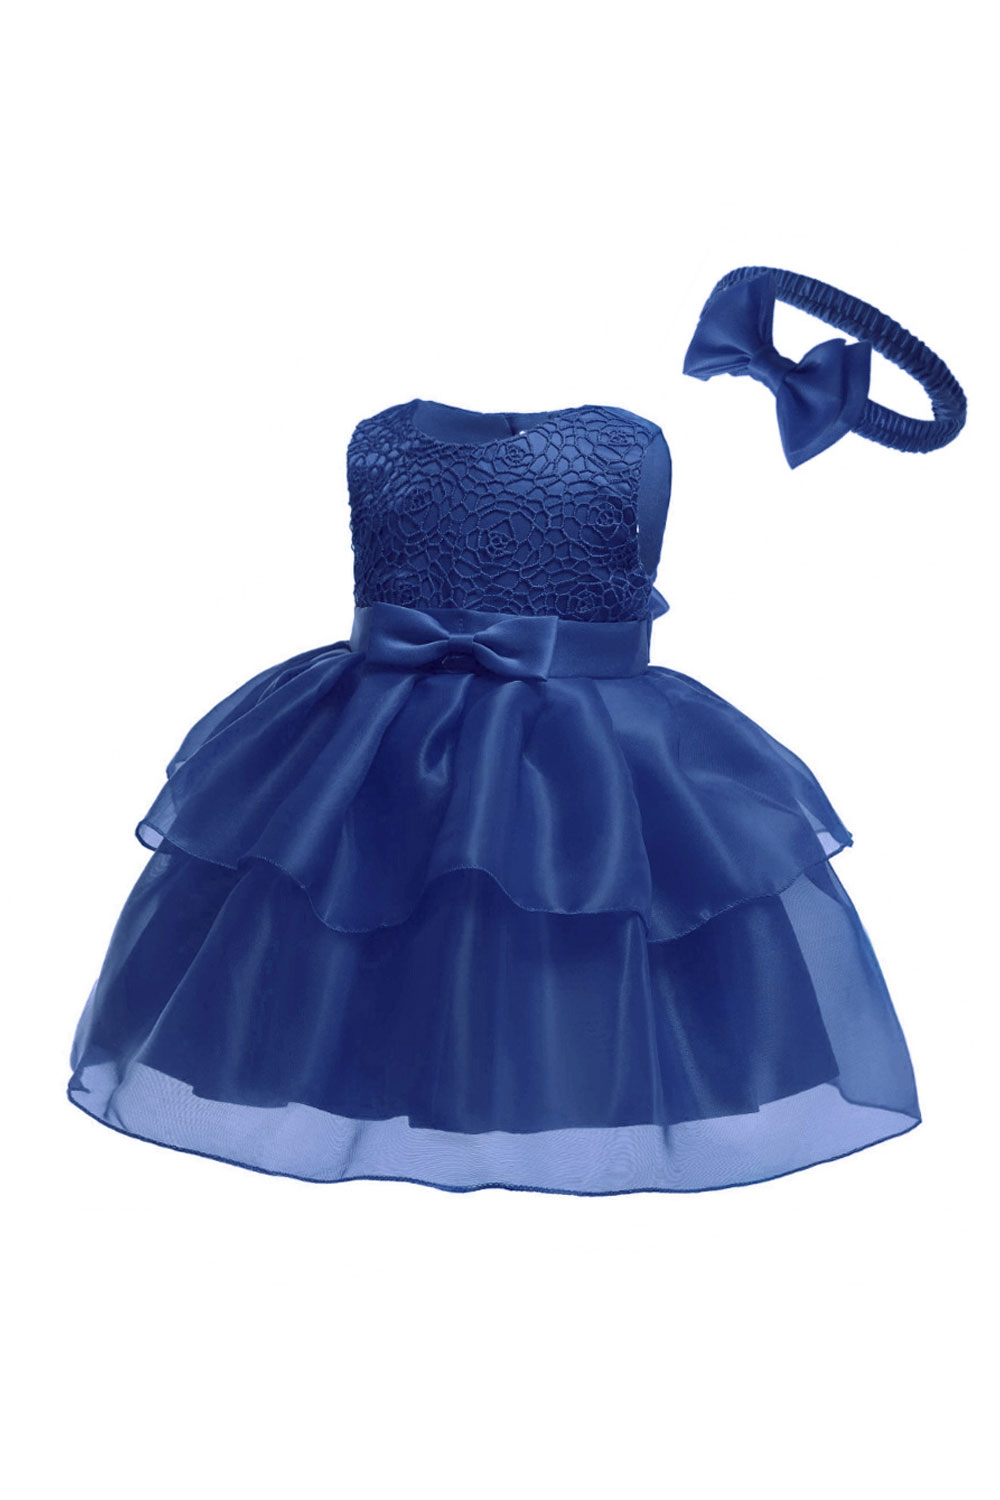 ZaraBeez Toddler Baby Girls Lace Bust Small Bow Fancy Dress